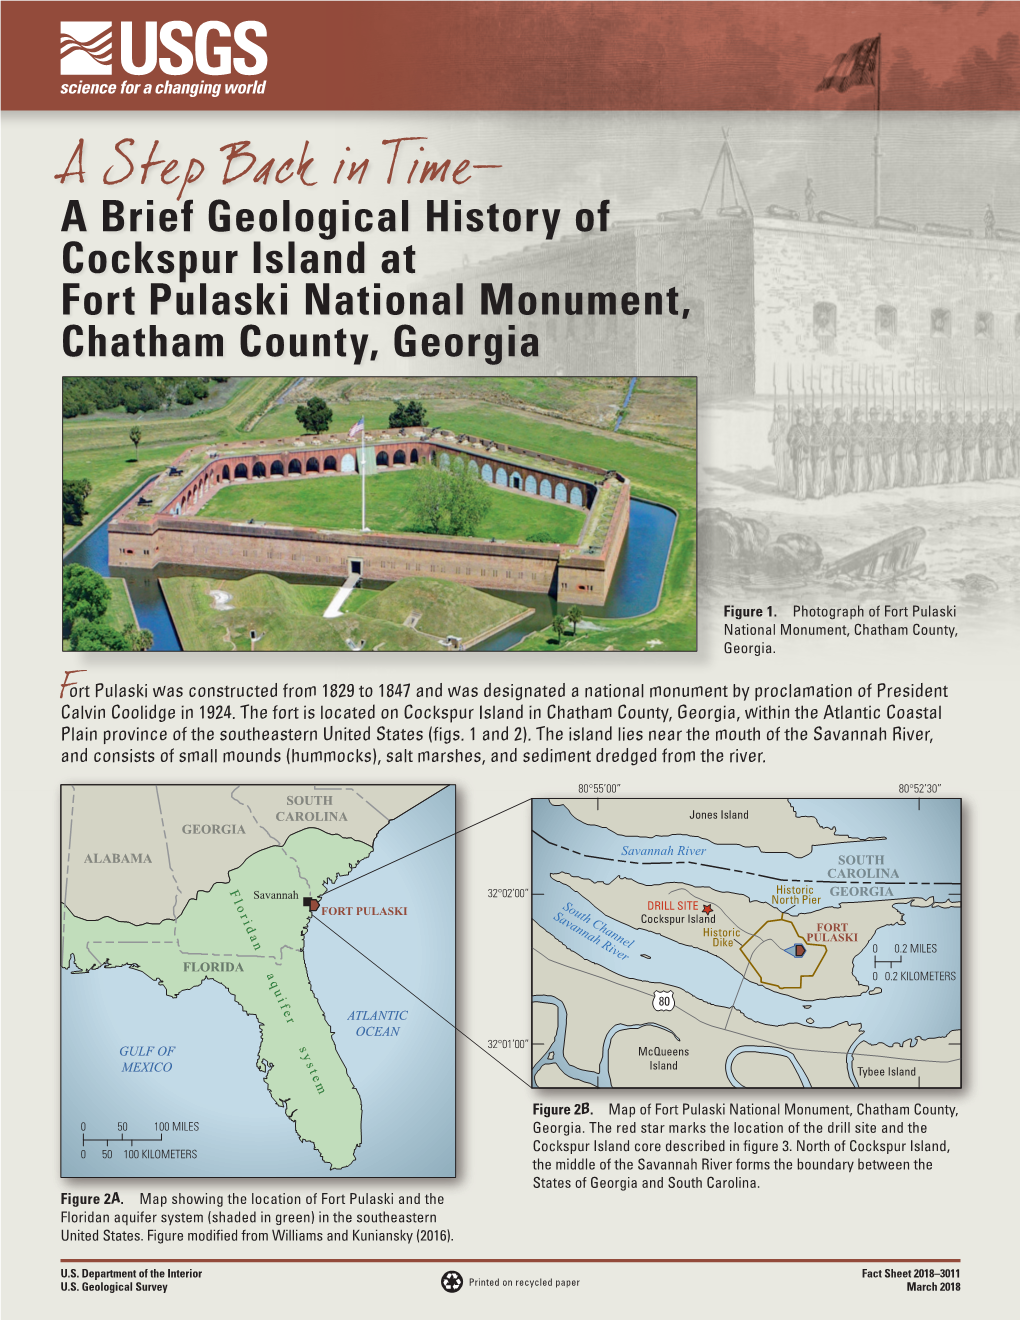 A Brief Geological History of Cockspur Island at Fort Pulaski National